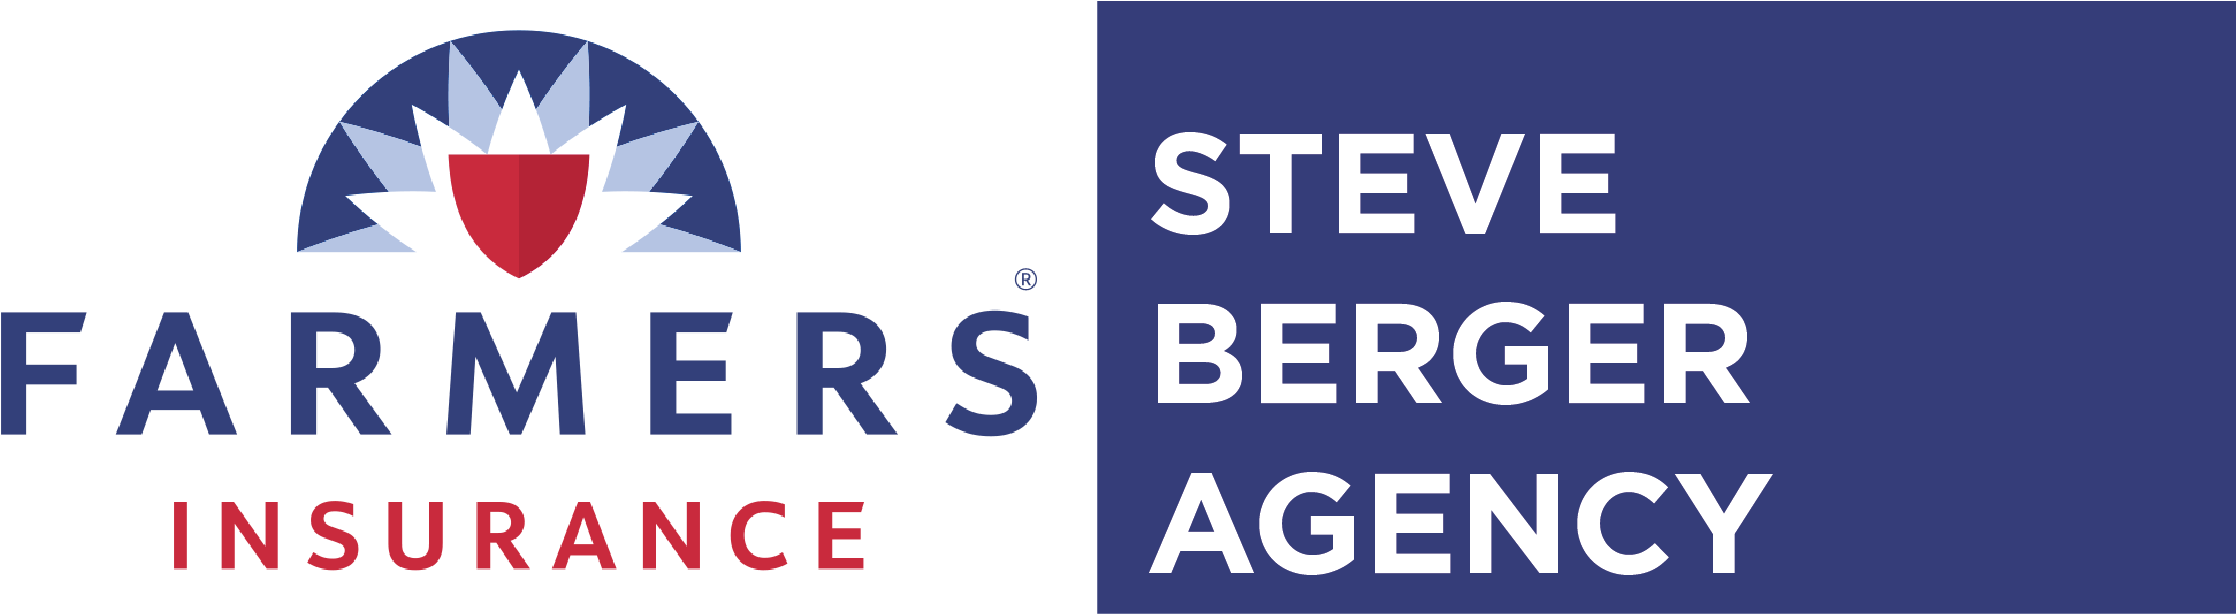 Farmers Insurance Steve Berger Agency Logo PNG